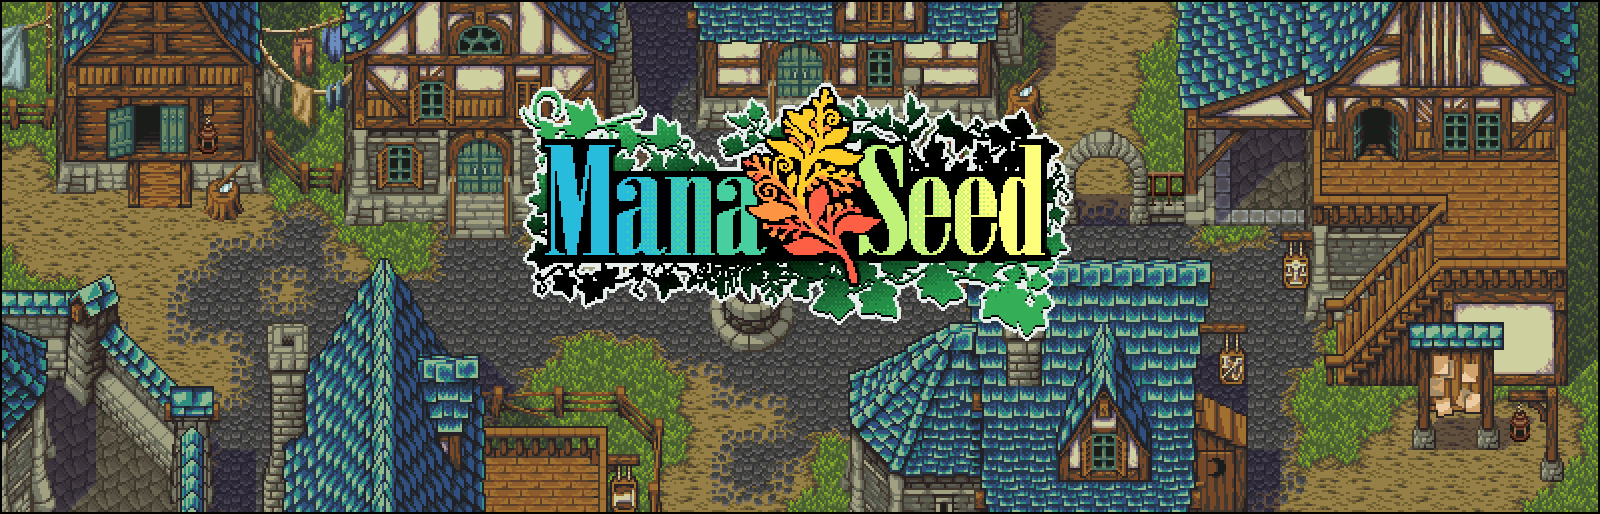 Character Base - A "Mana Seed" Pixel Art Sprite Sheet